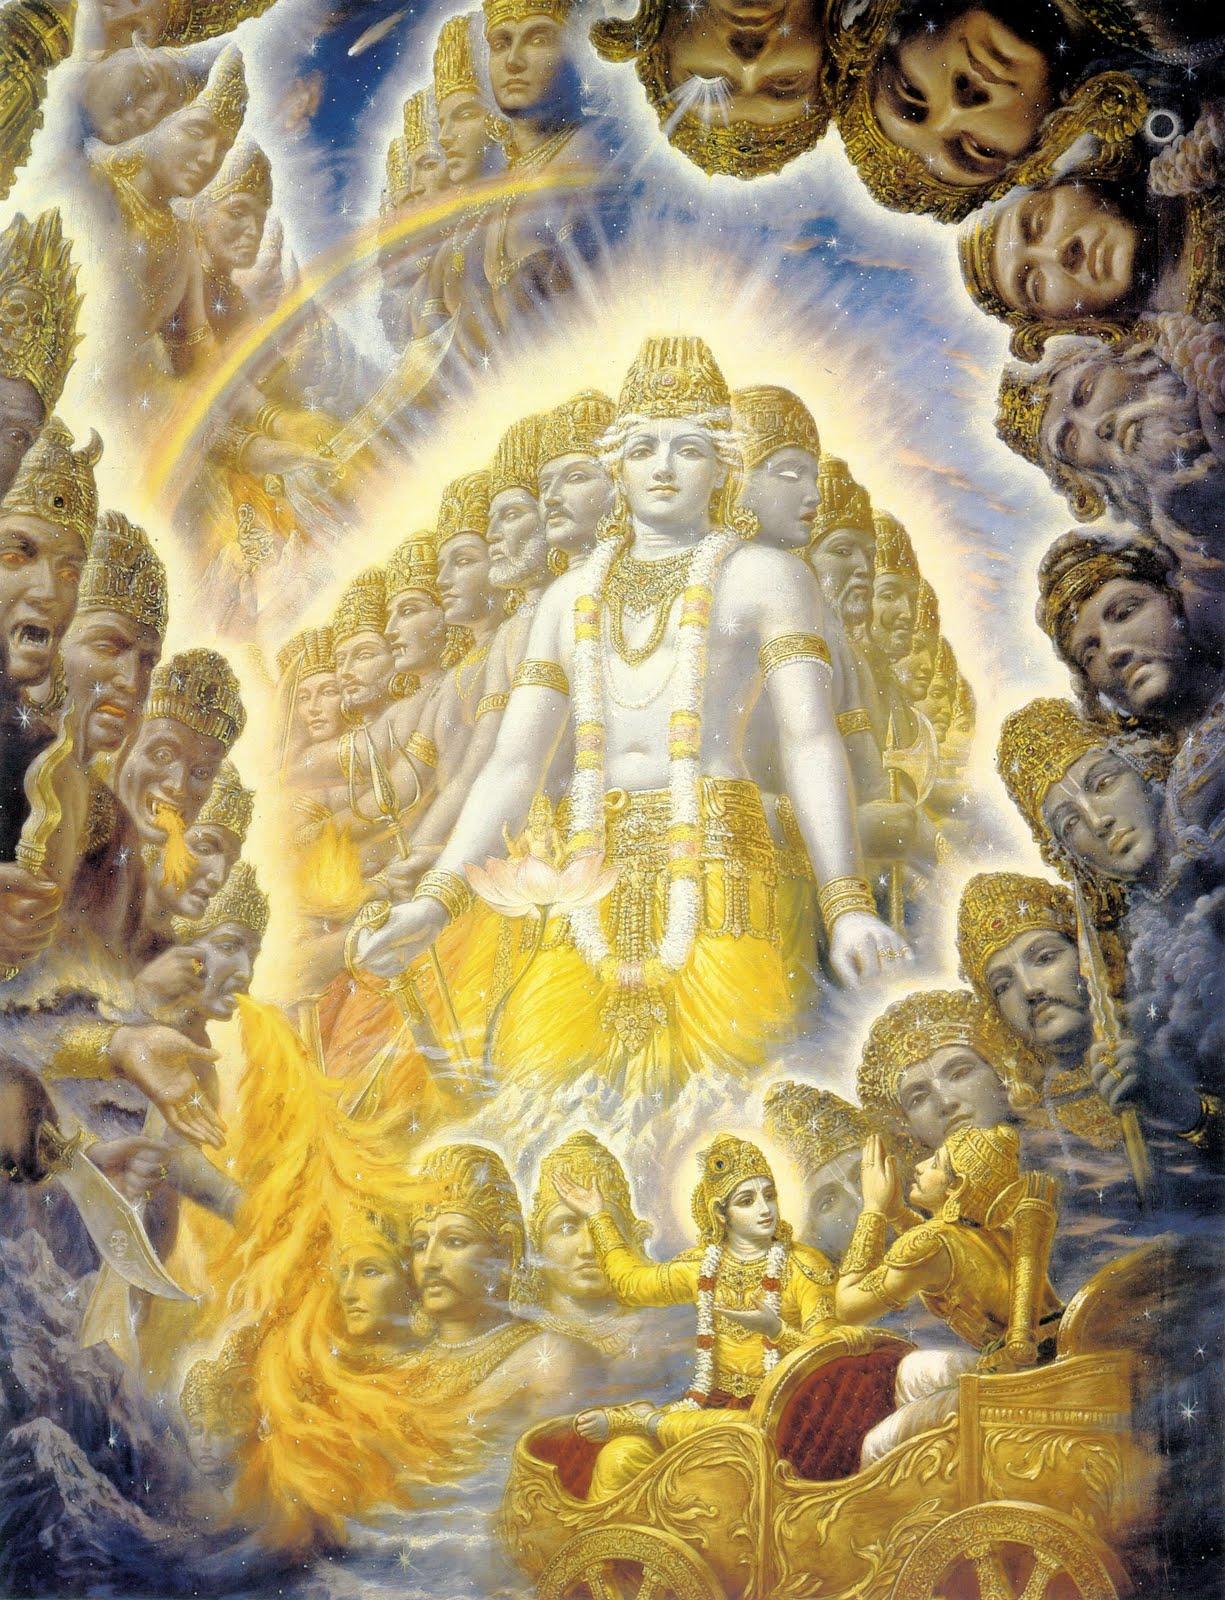 Latest Krishna Wallpaper and Krishna picture: The universal cosmic form of Lord Krishna